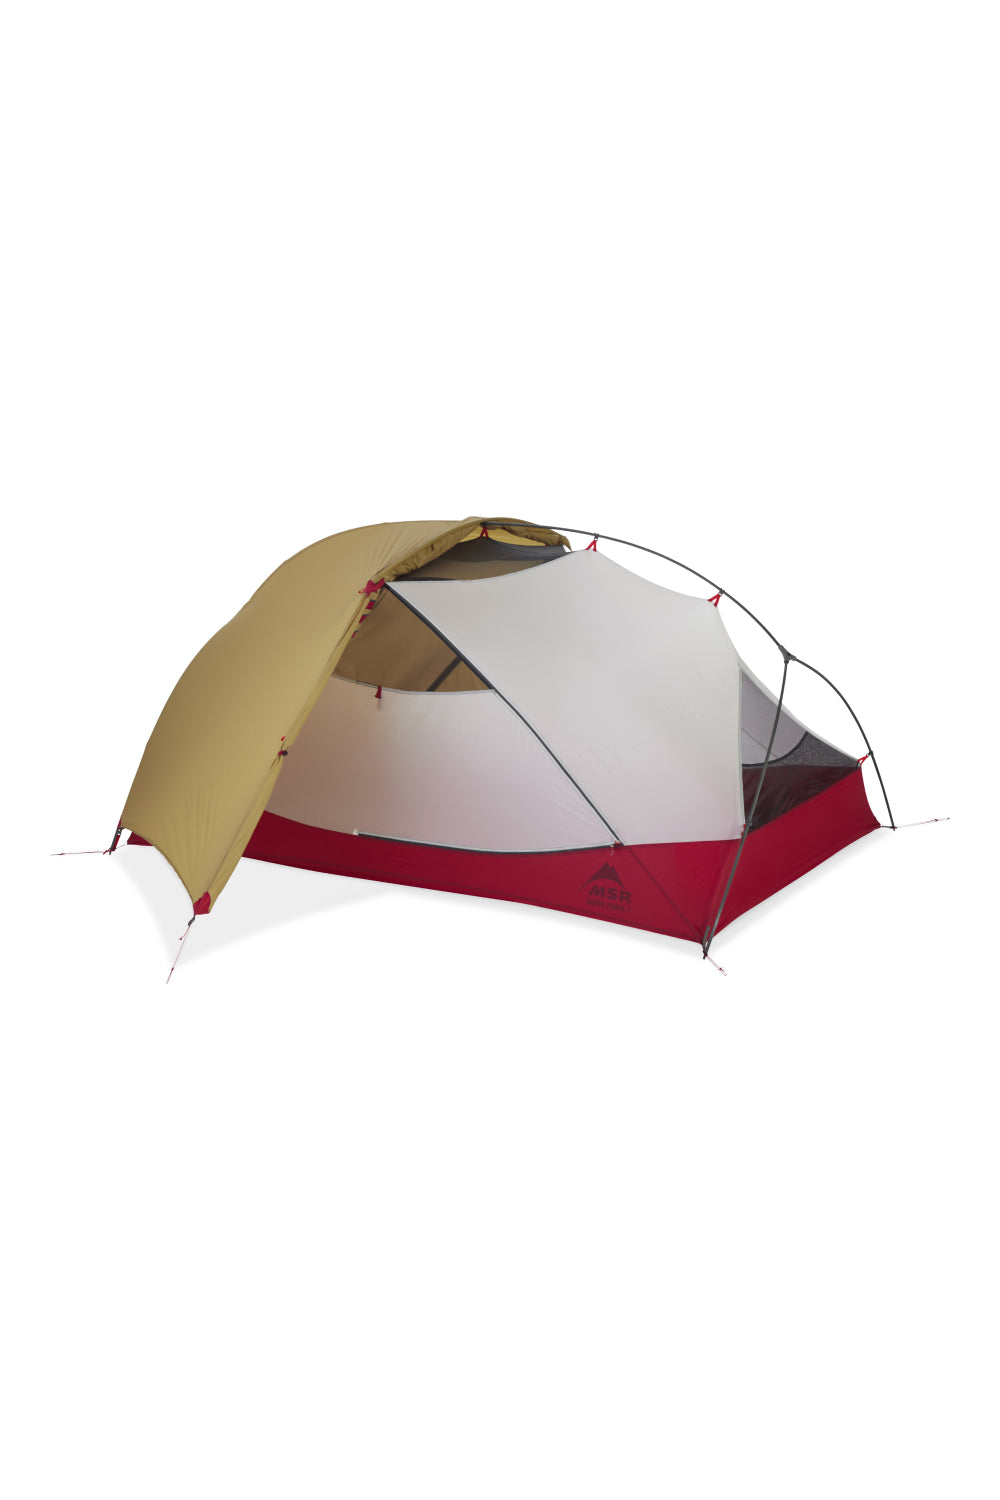 MSR Hubba Hubba 2 Tent | Coffee Outdoors